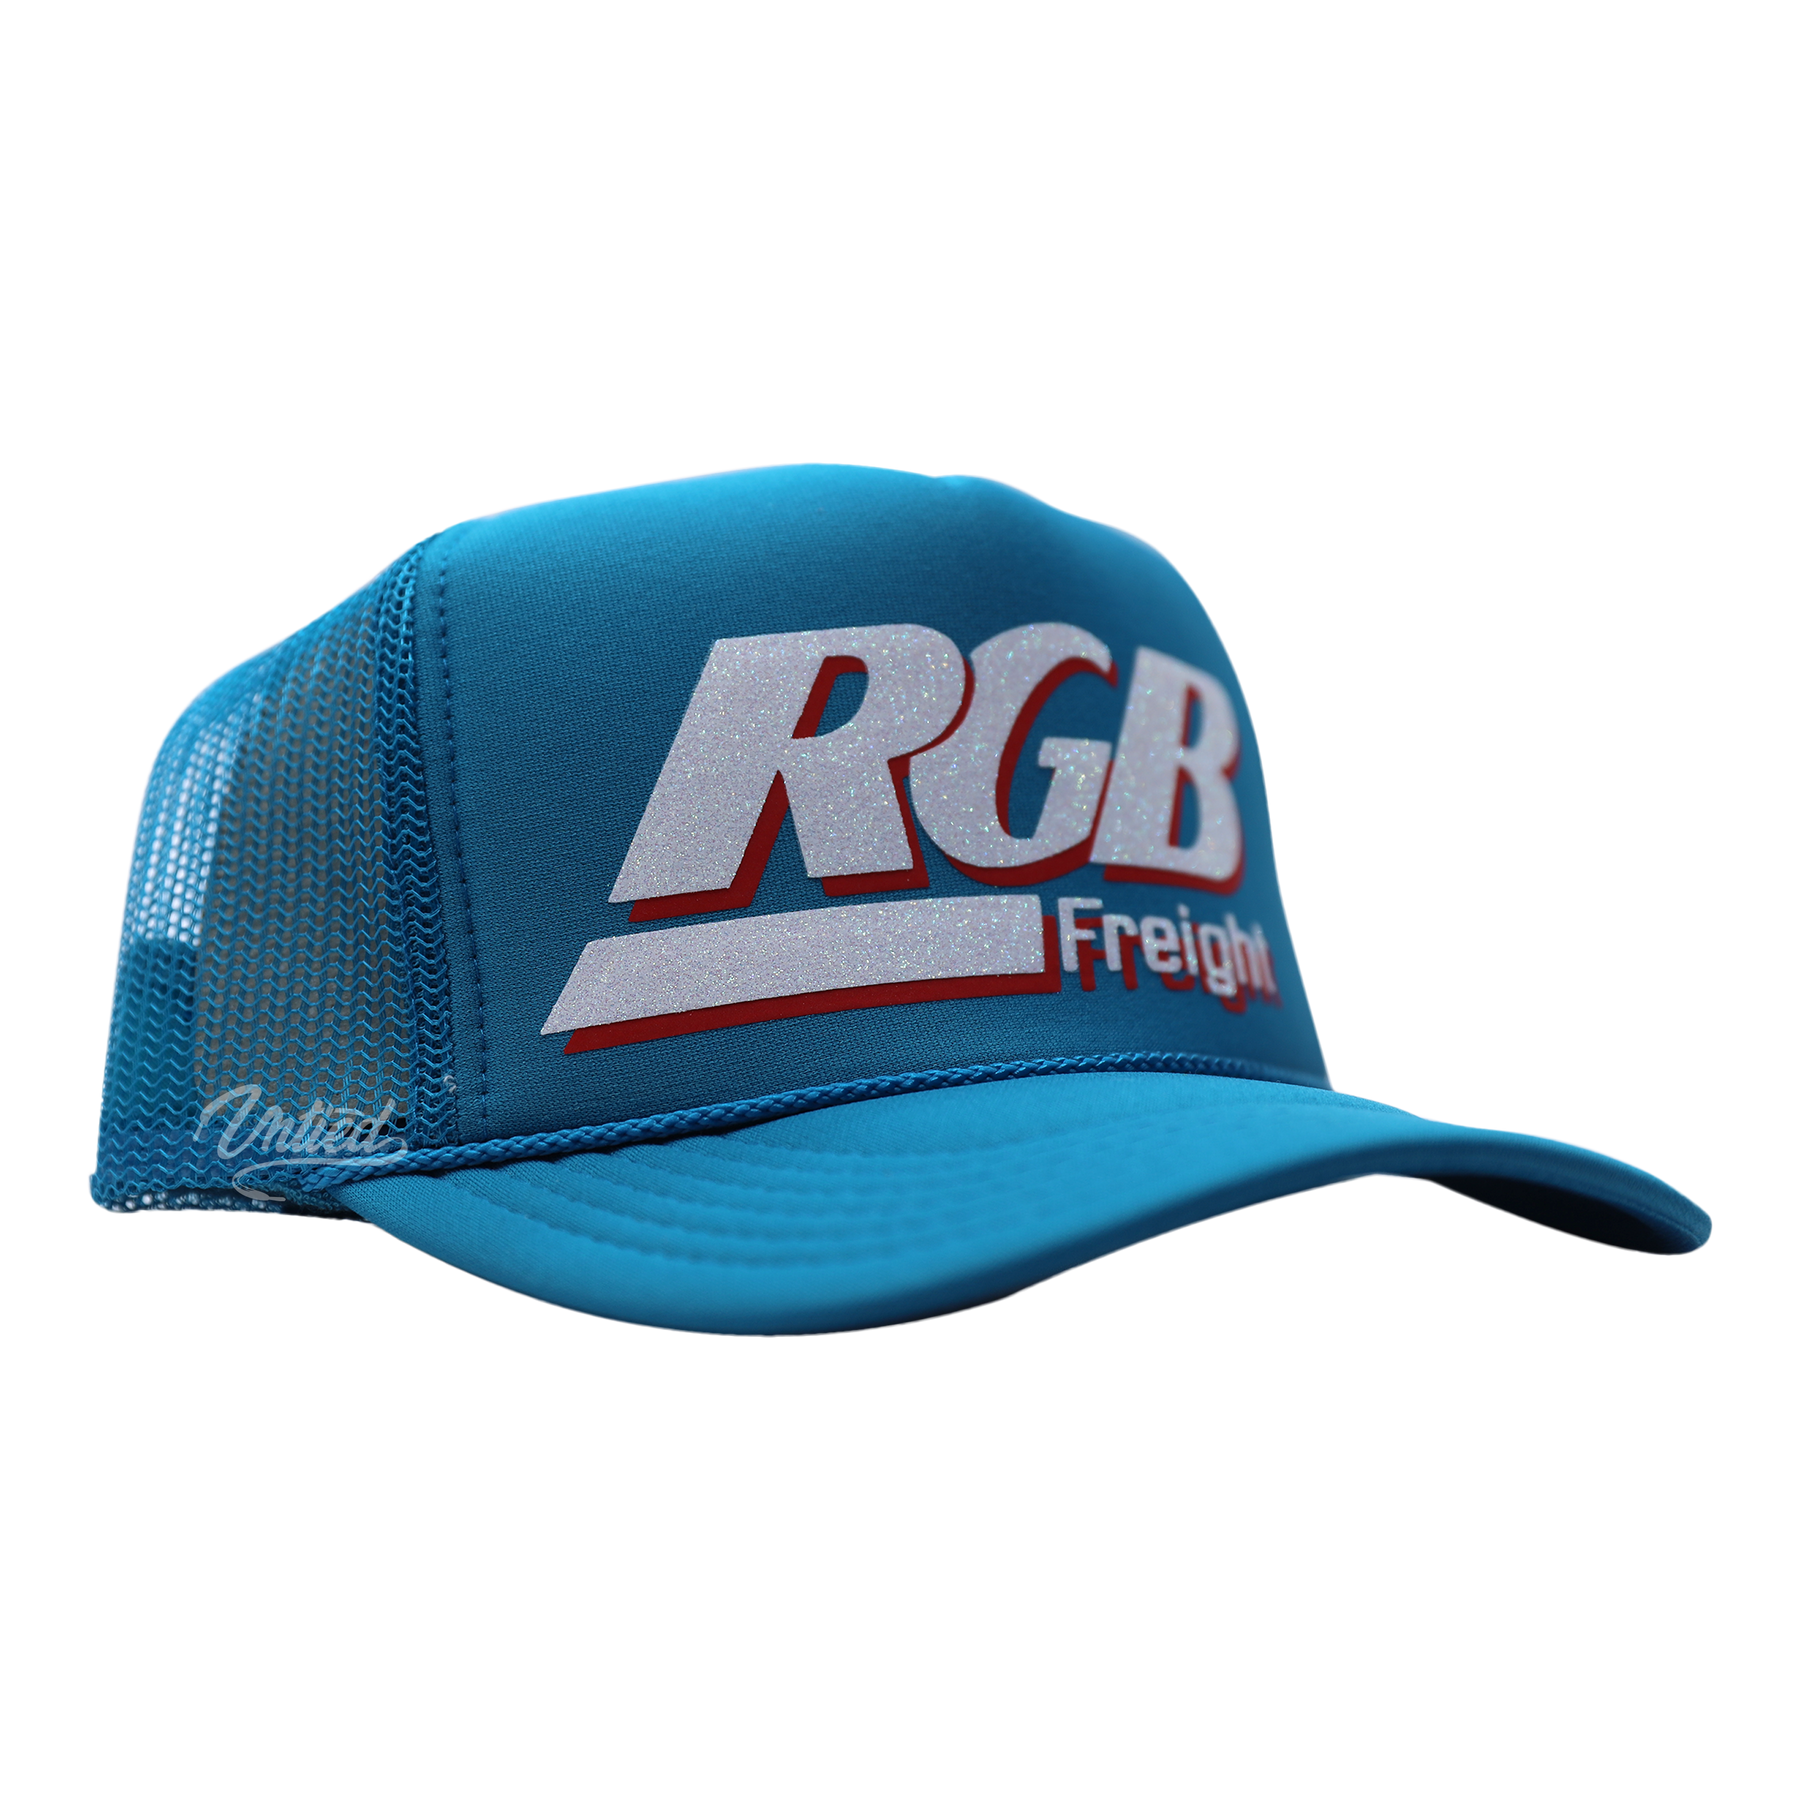 RGB Freight Trucker Hat "CHI BLING"